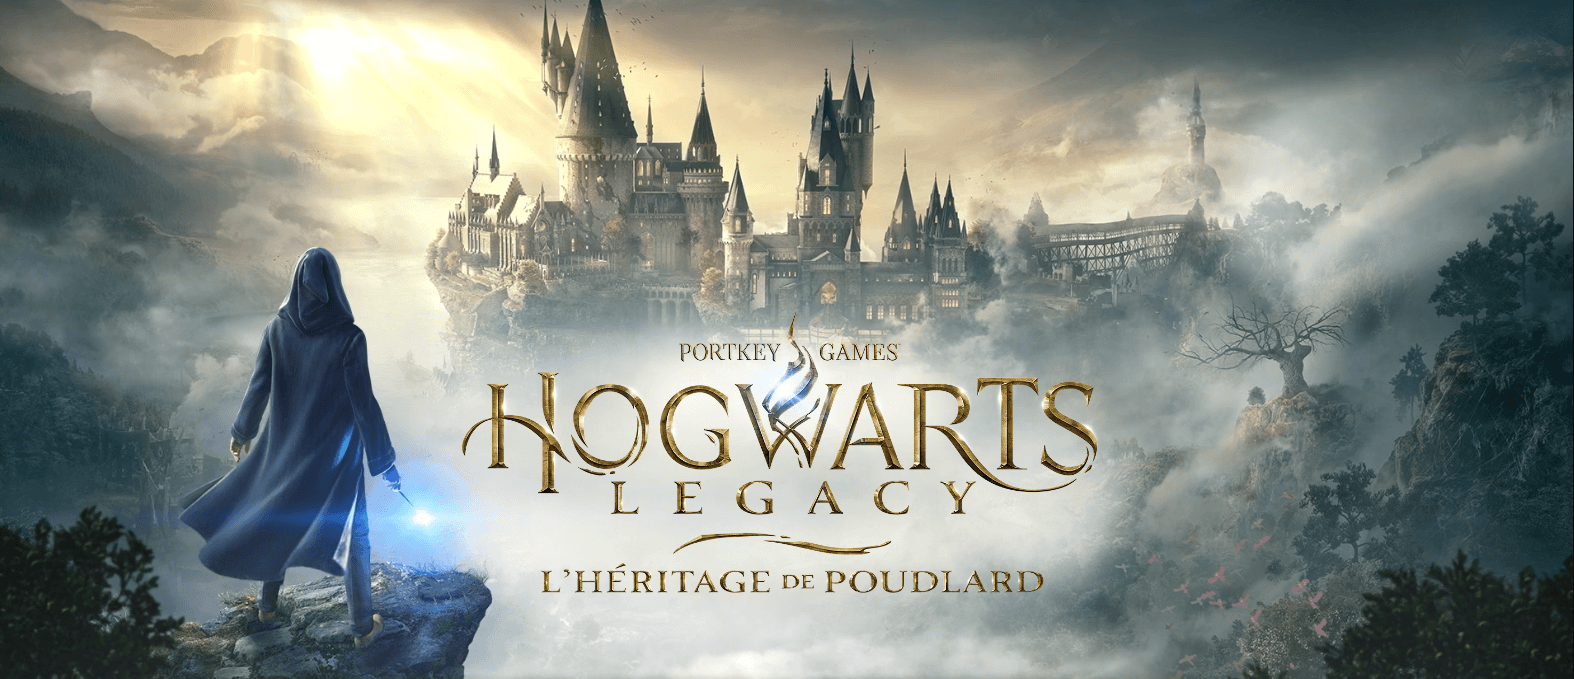 hogwarts legacy ps4 sortie